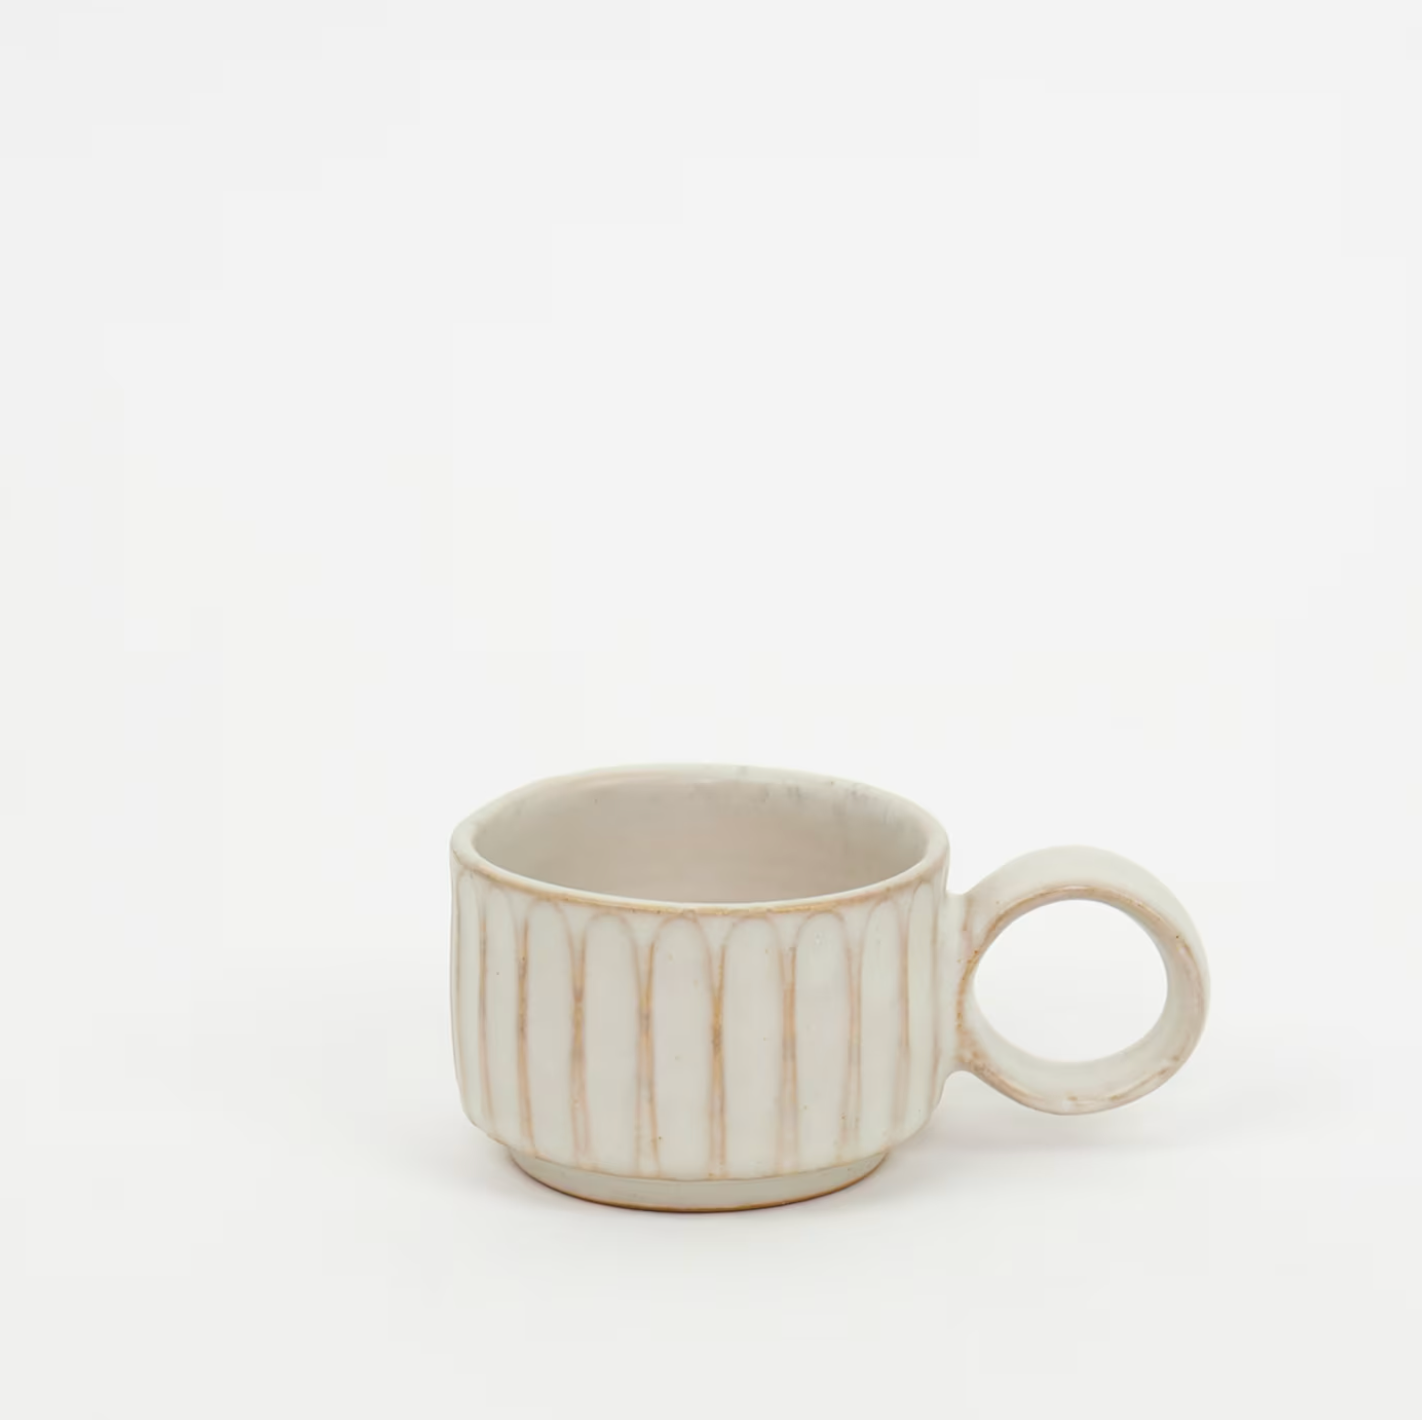 Mini Cup Rhea in Beige, espresso mug, handmade in stoneware clay 6cm